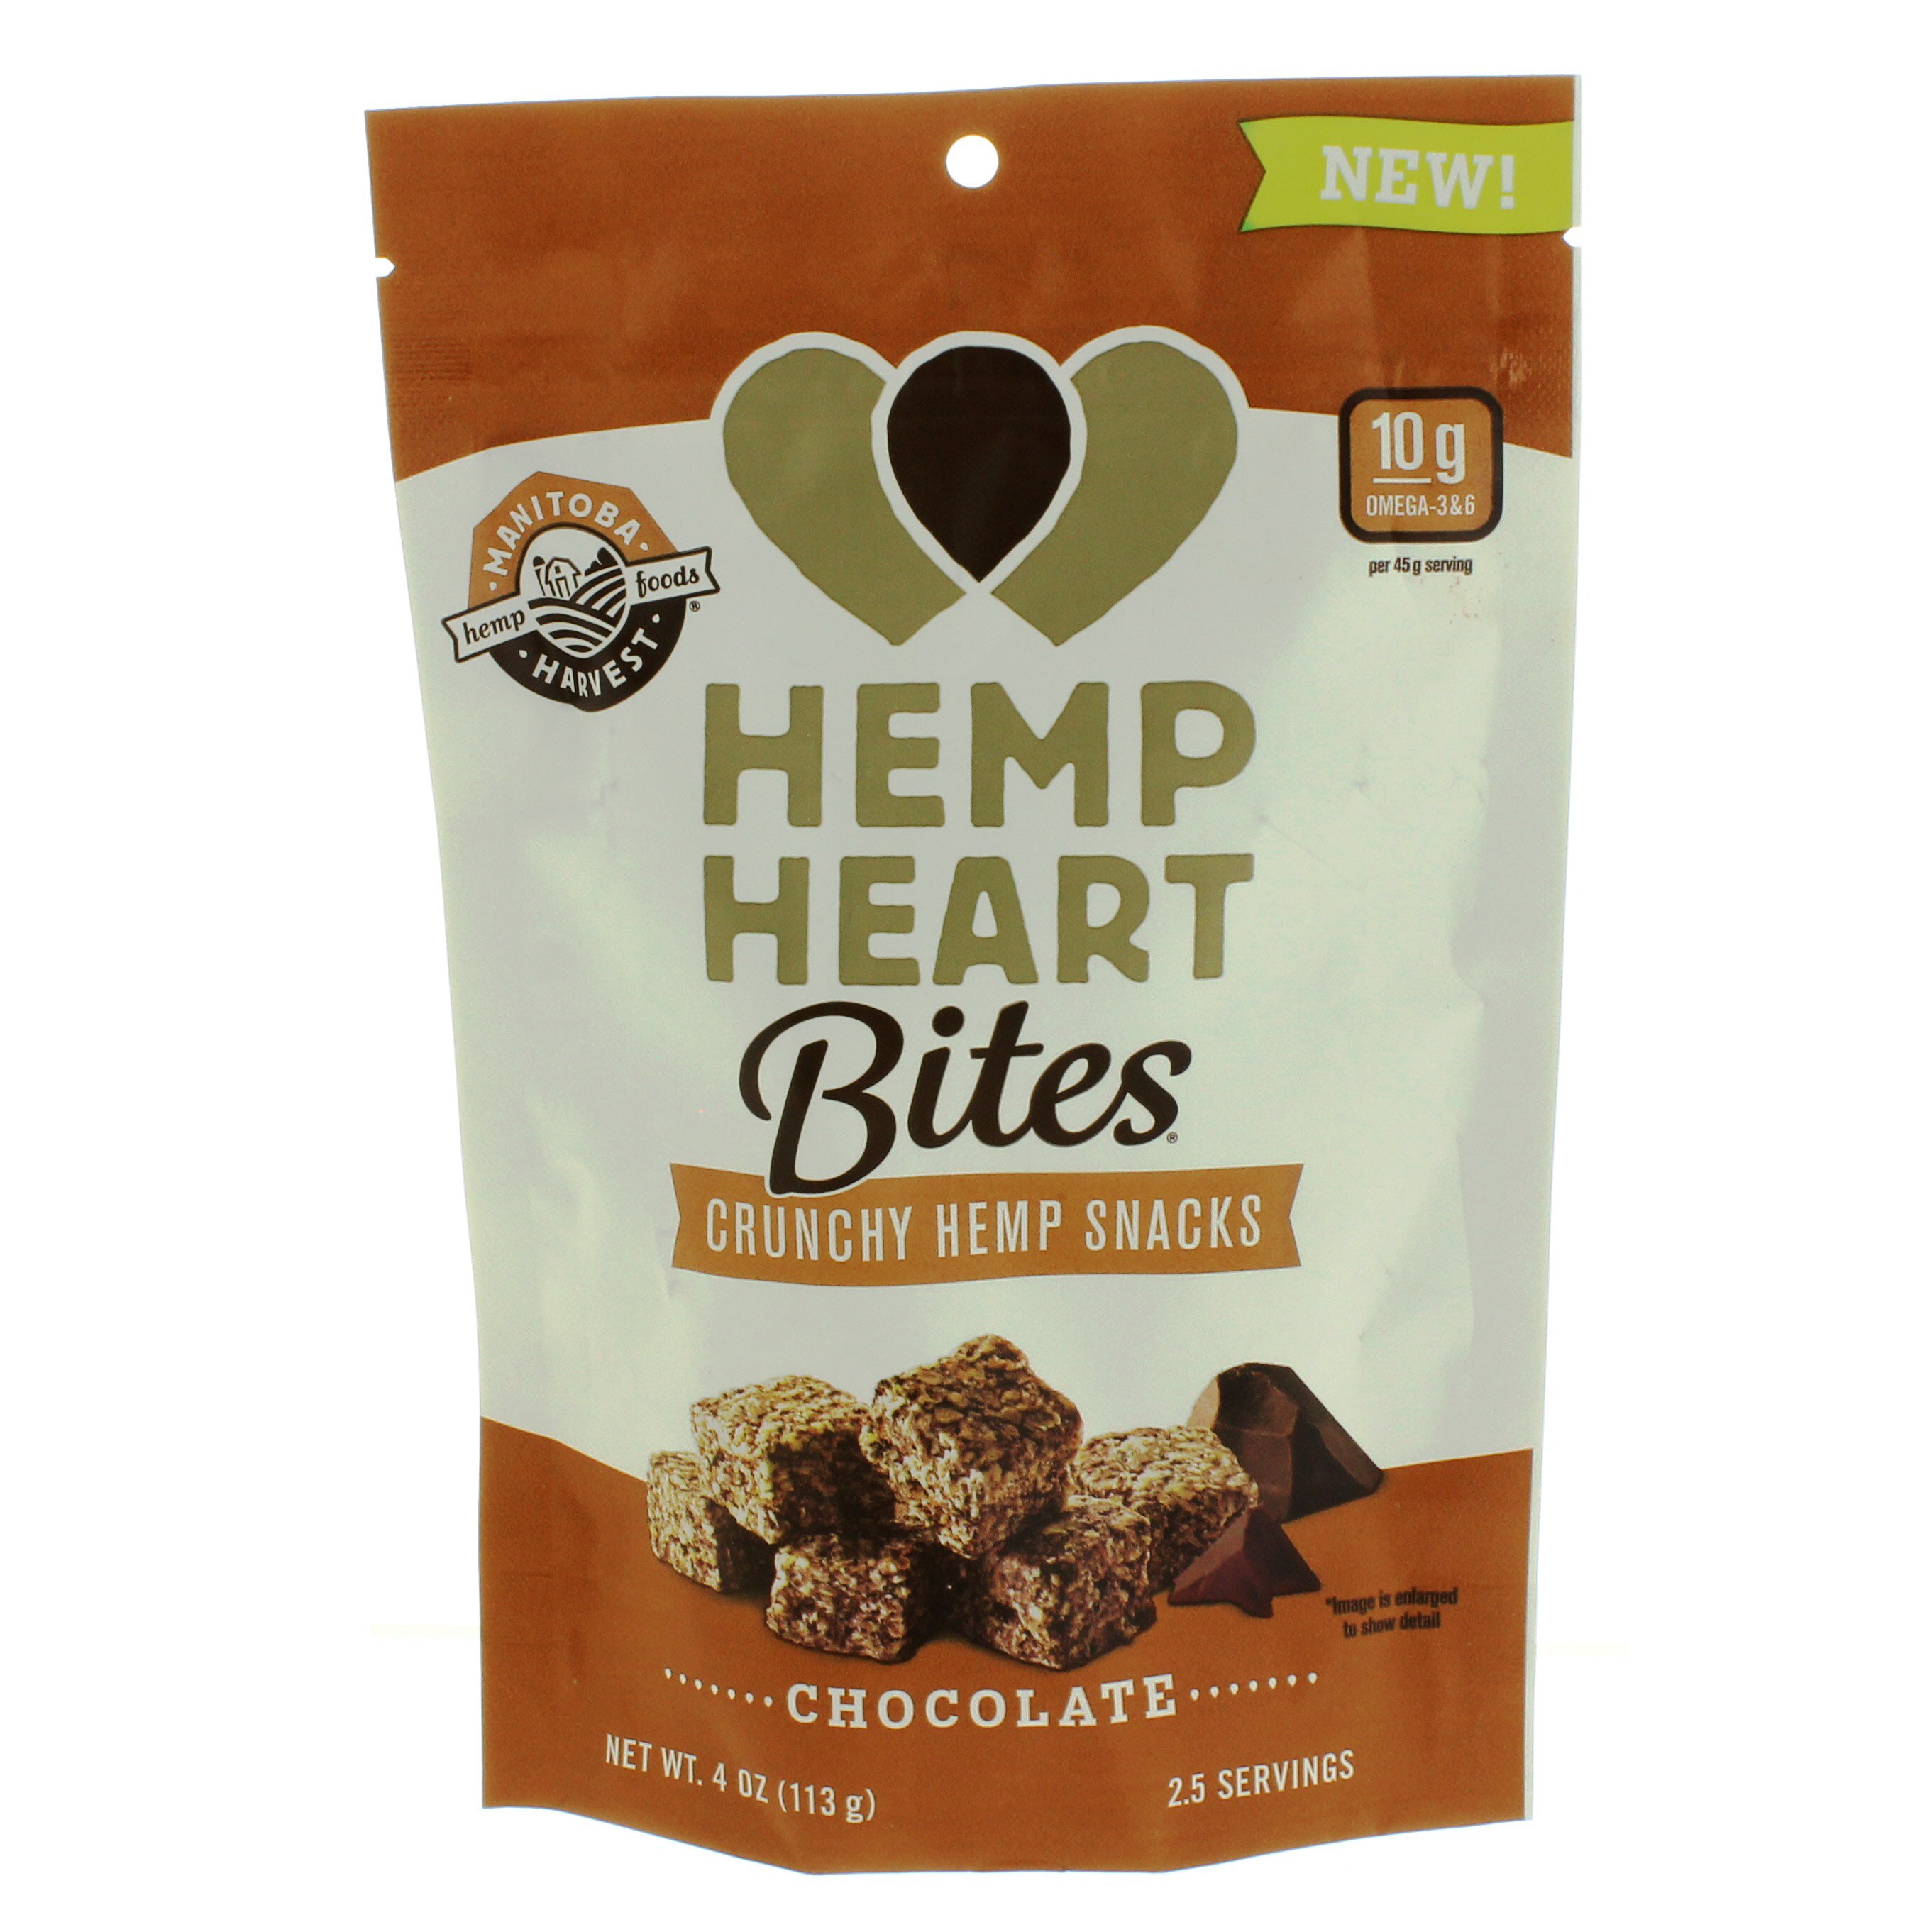 Manitoba Harvest Hemp Hearts Organic Seeds - Shop Diet & Fitness at H-E-B